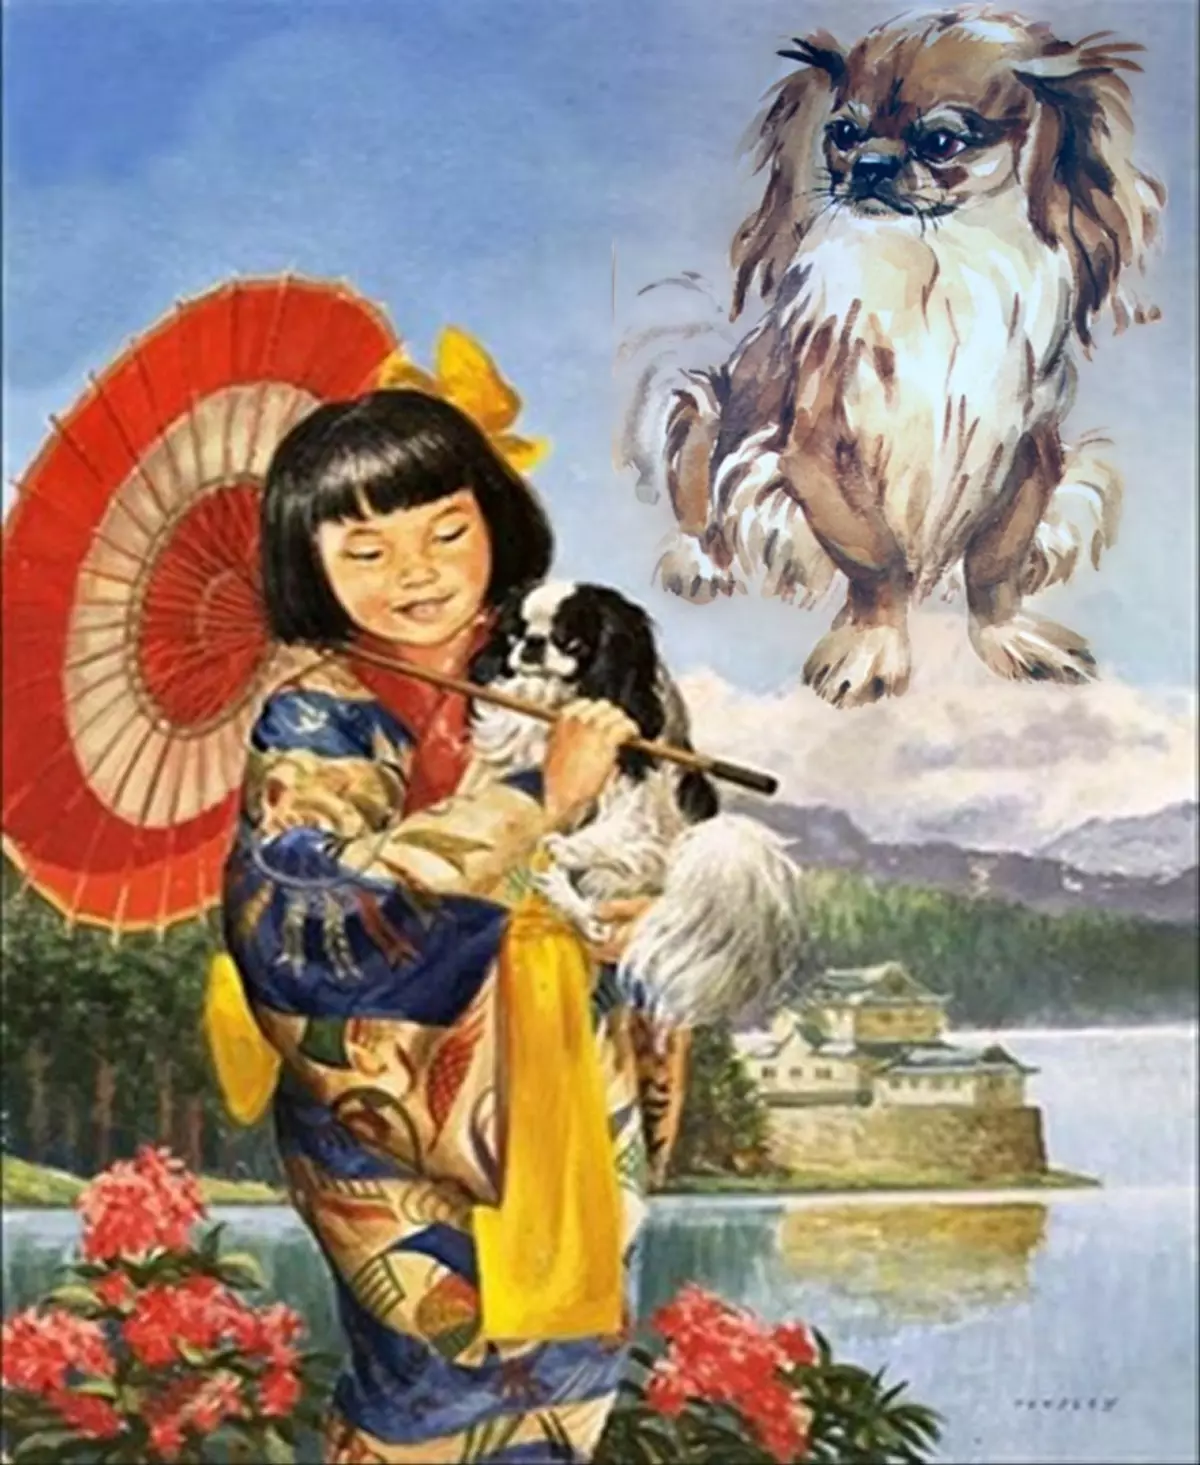 Royal Pekingese (23 عکس): شرح نژاد، ویژگی های مراقبت از سگ بزرگسالان و توله سگ 22843_8